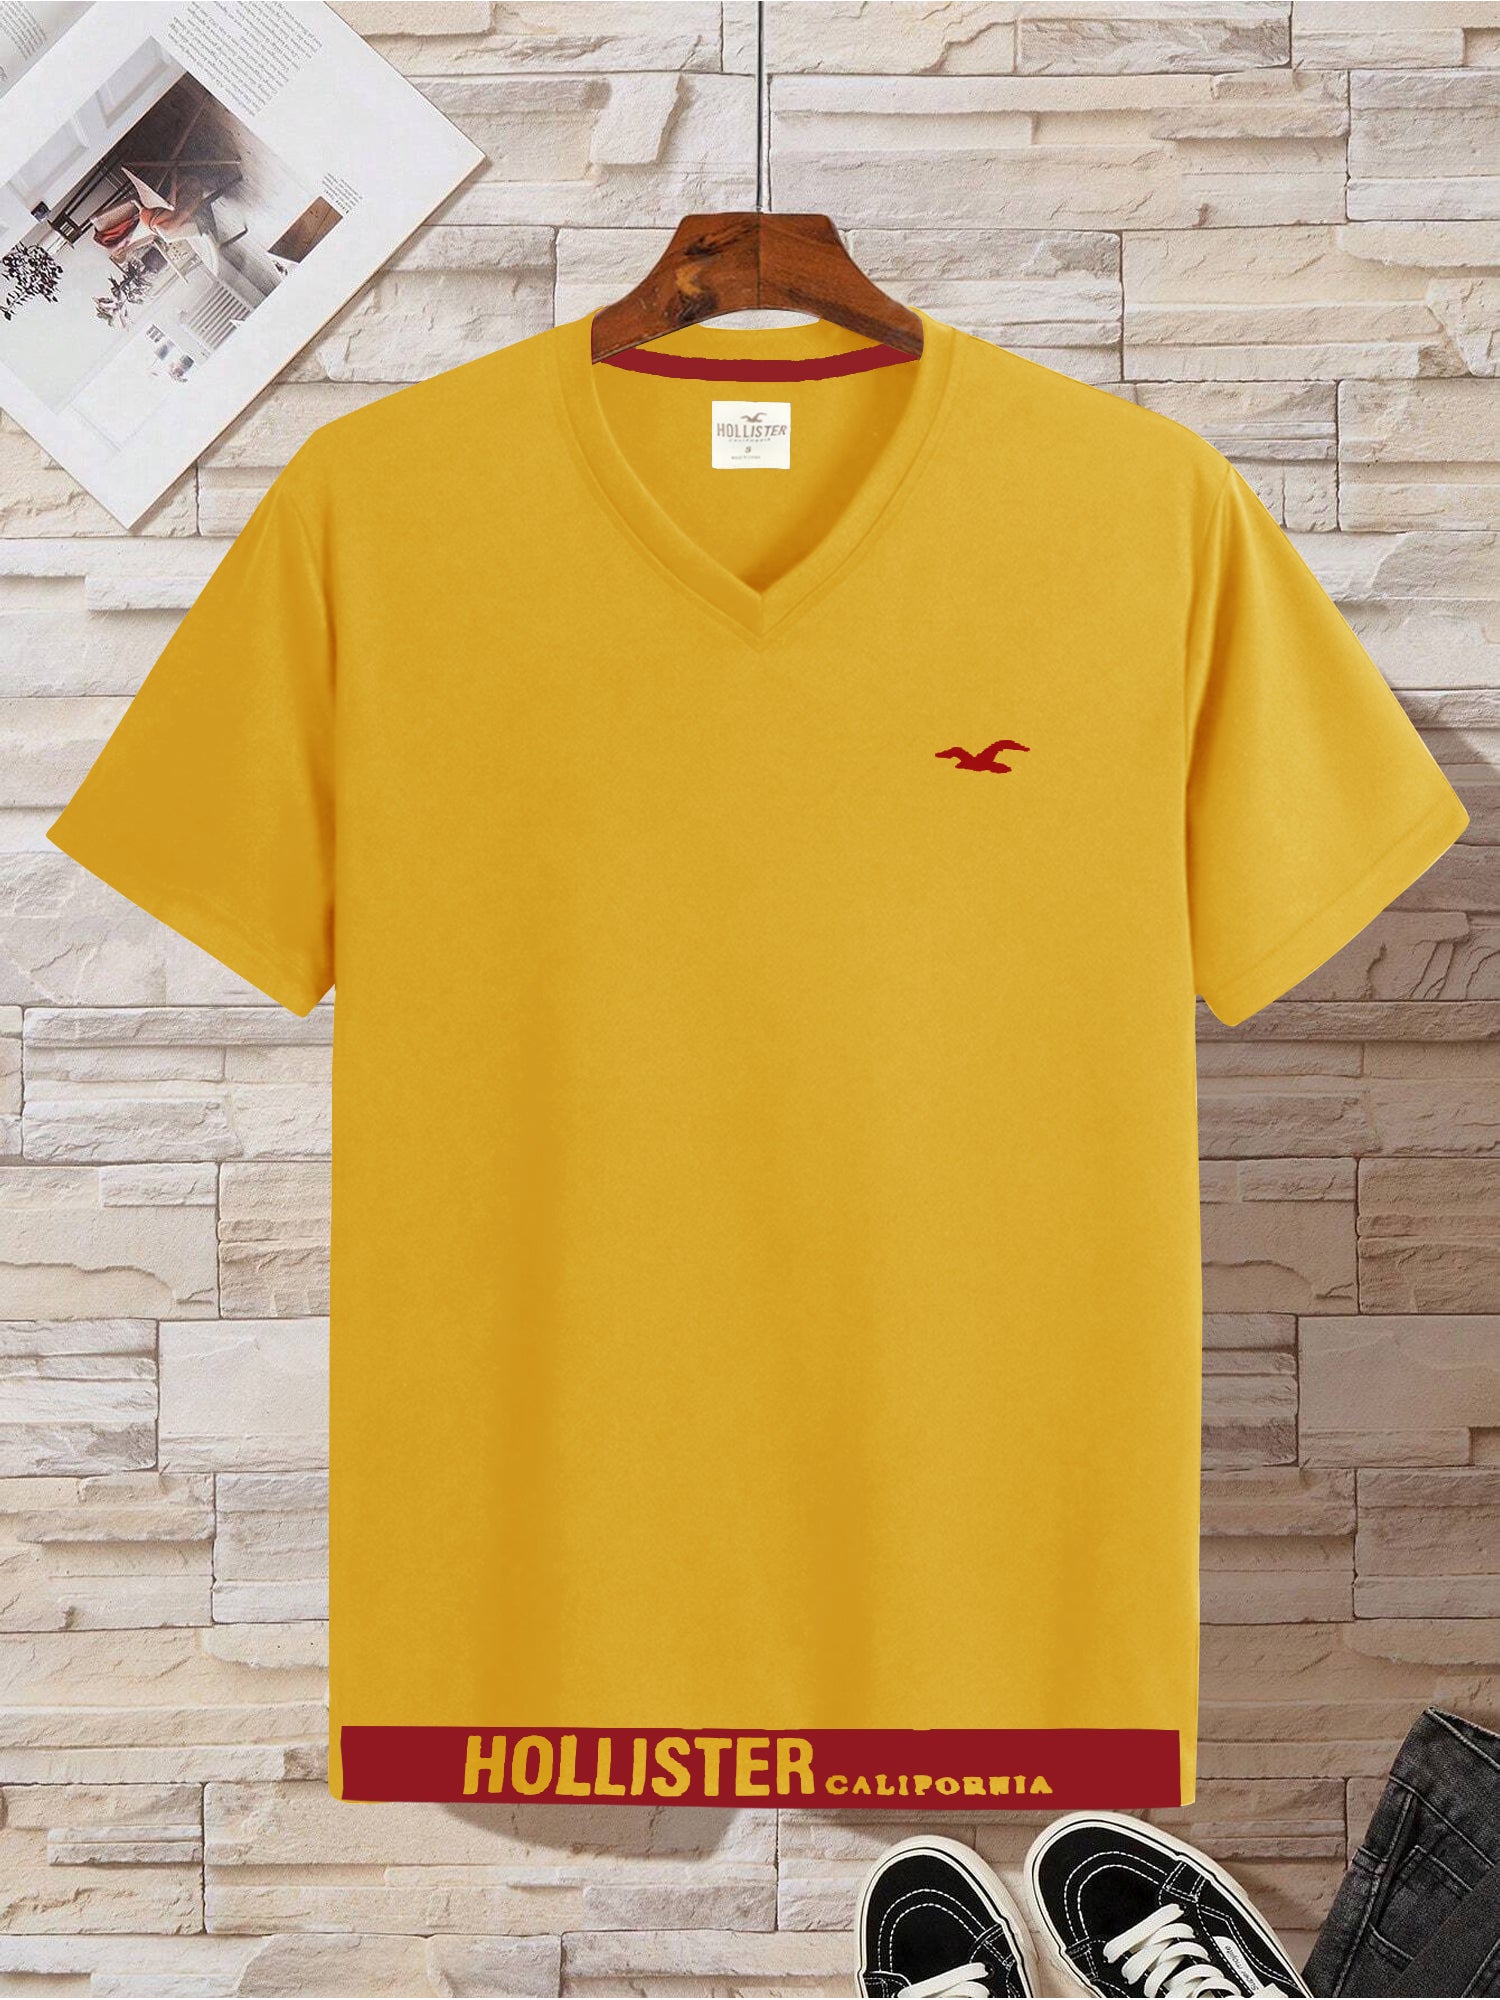 HST Single Jersey V Neck Tee Shirt For Men-Yellow-SP1902